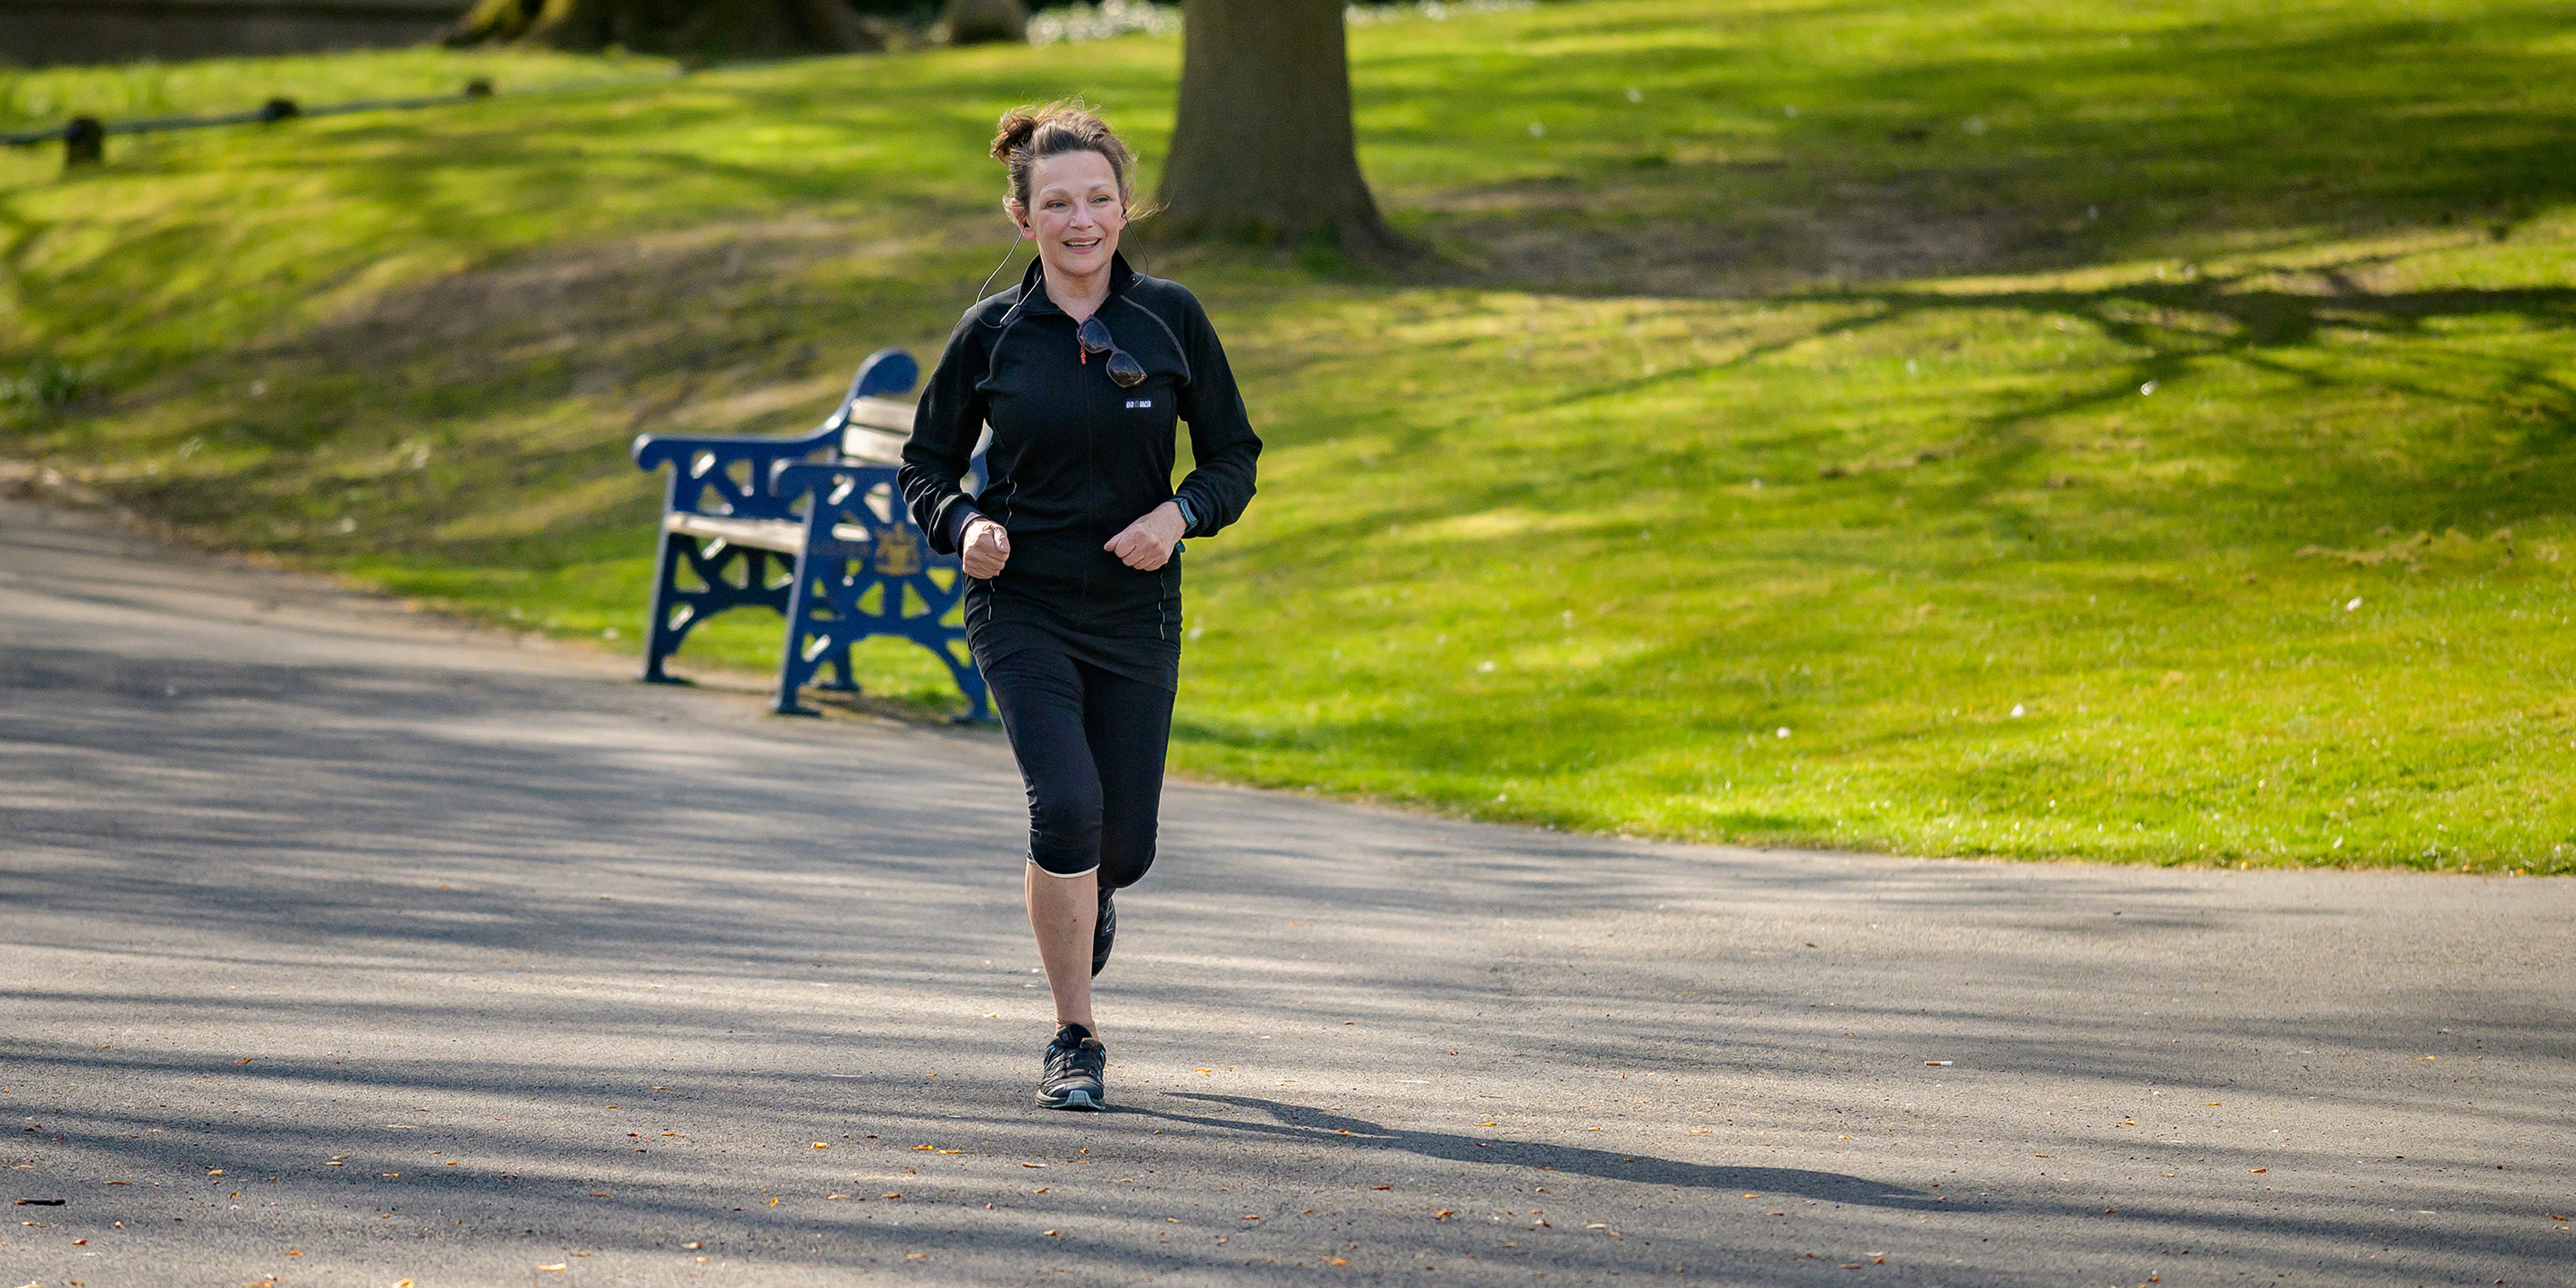 Woman in black jacket jogging